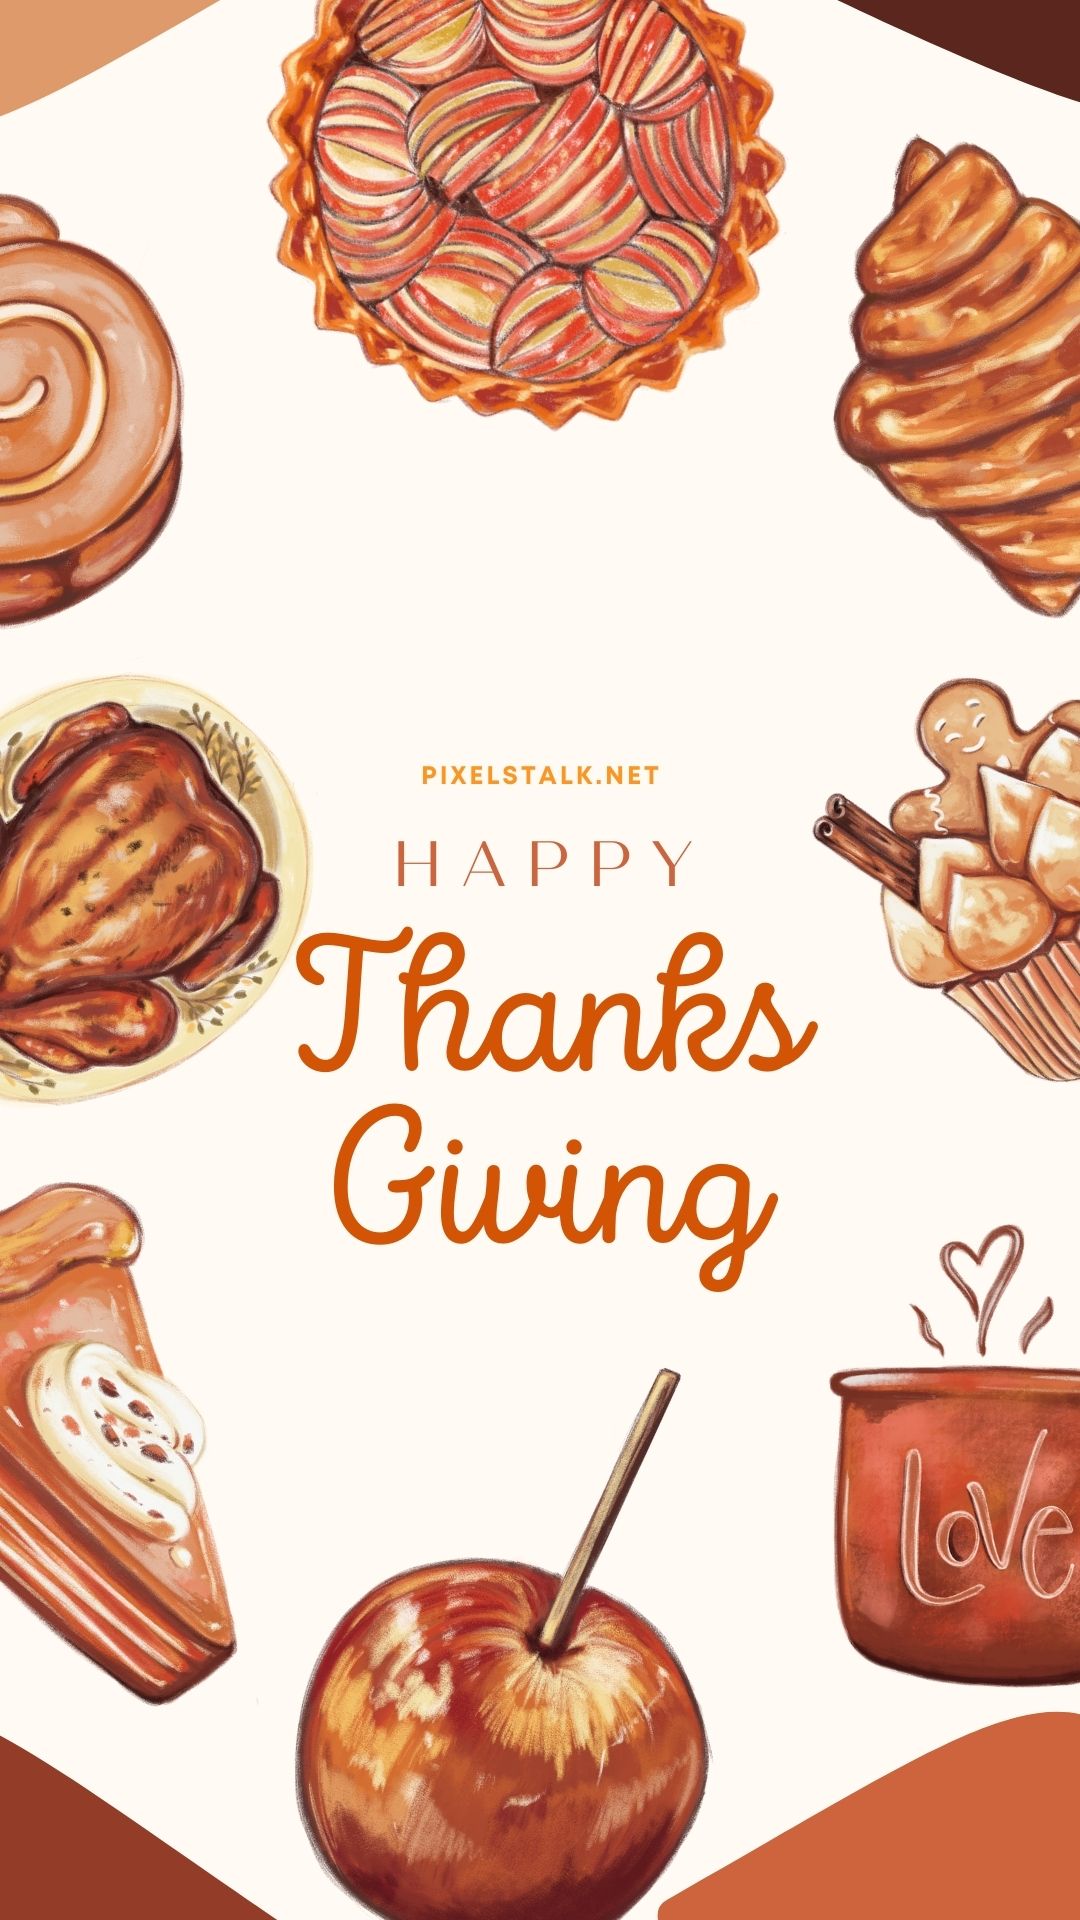 Free to edit Thanksgiving desktop wallpaper templates  Canva